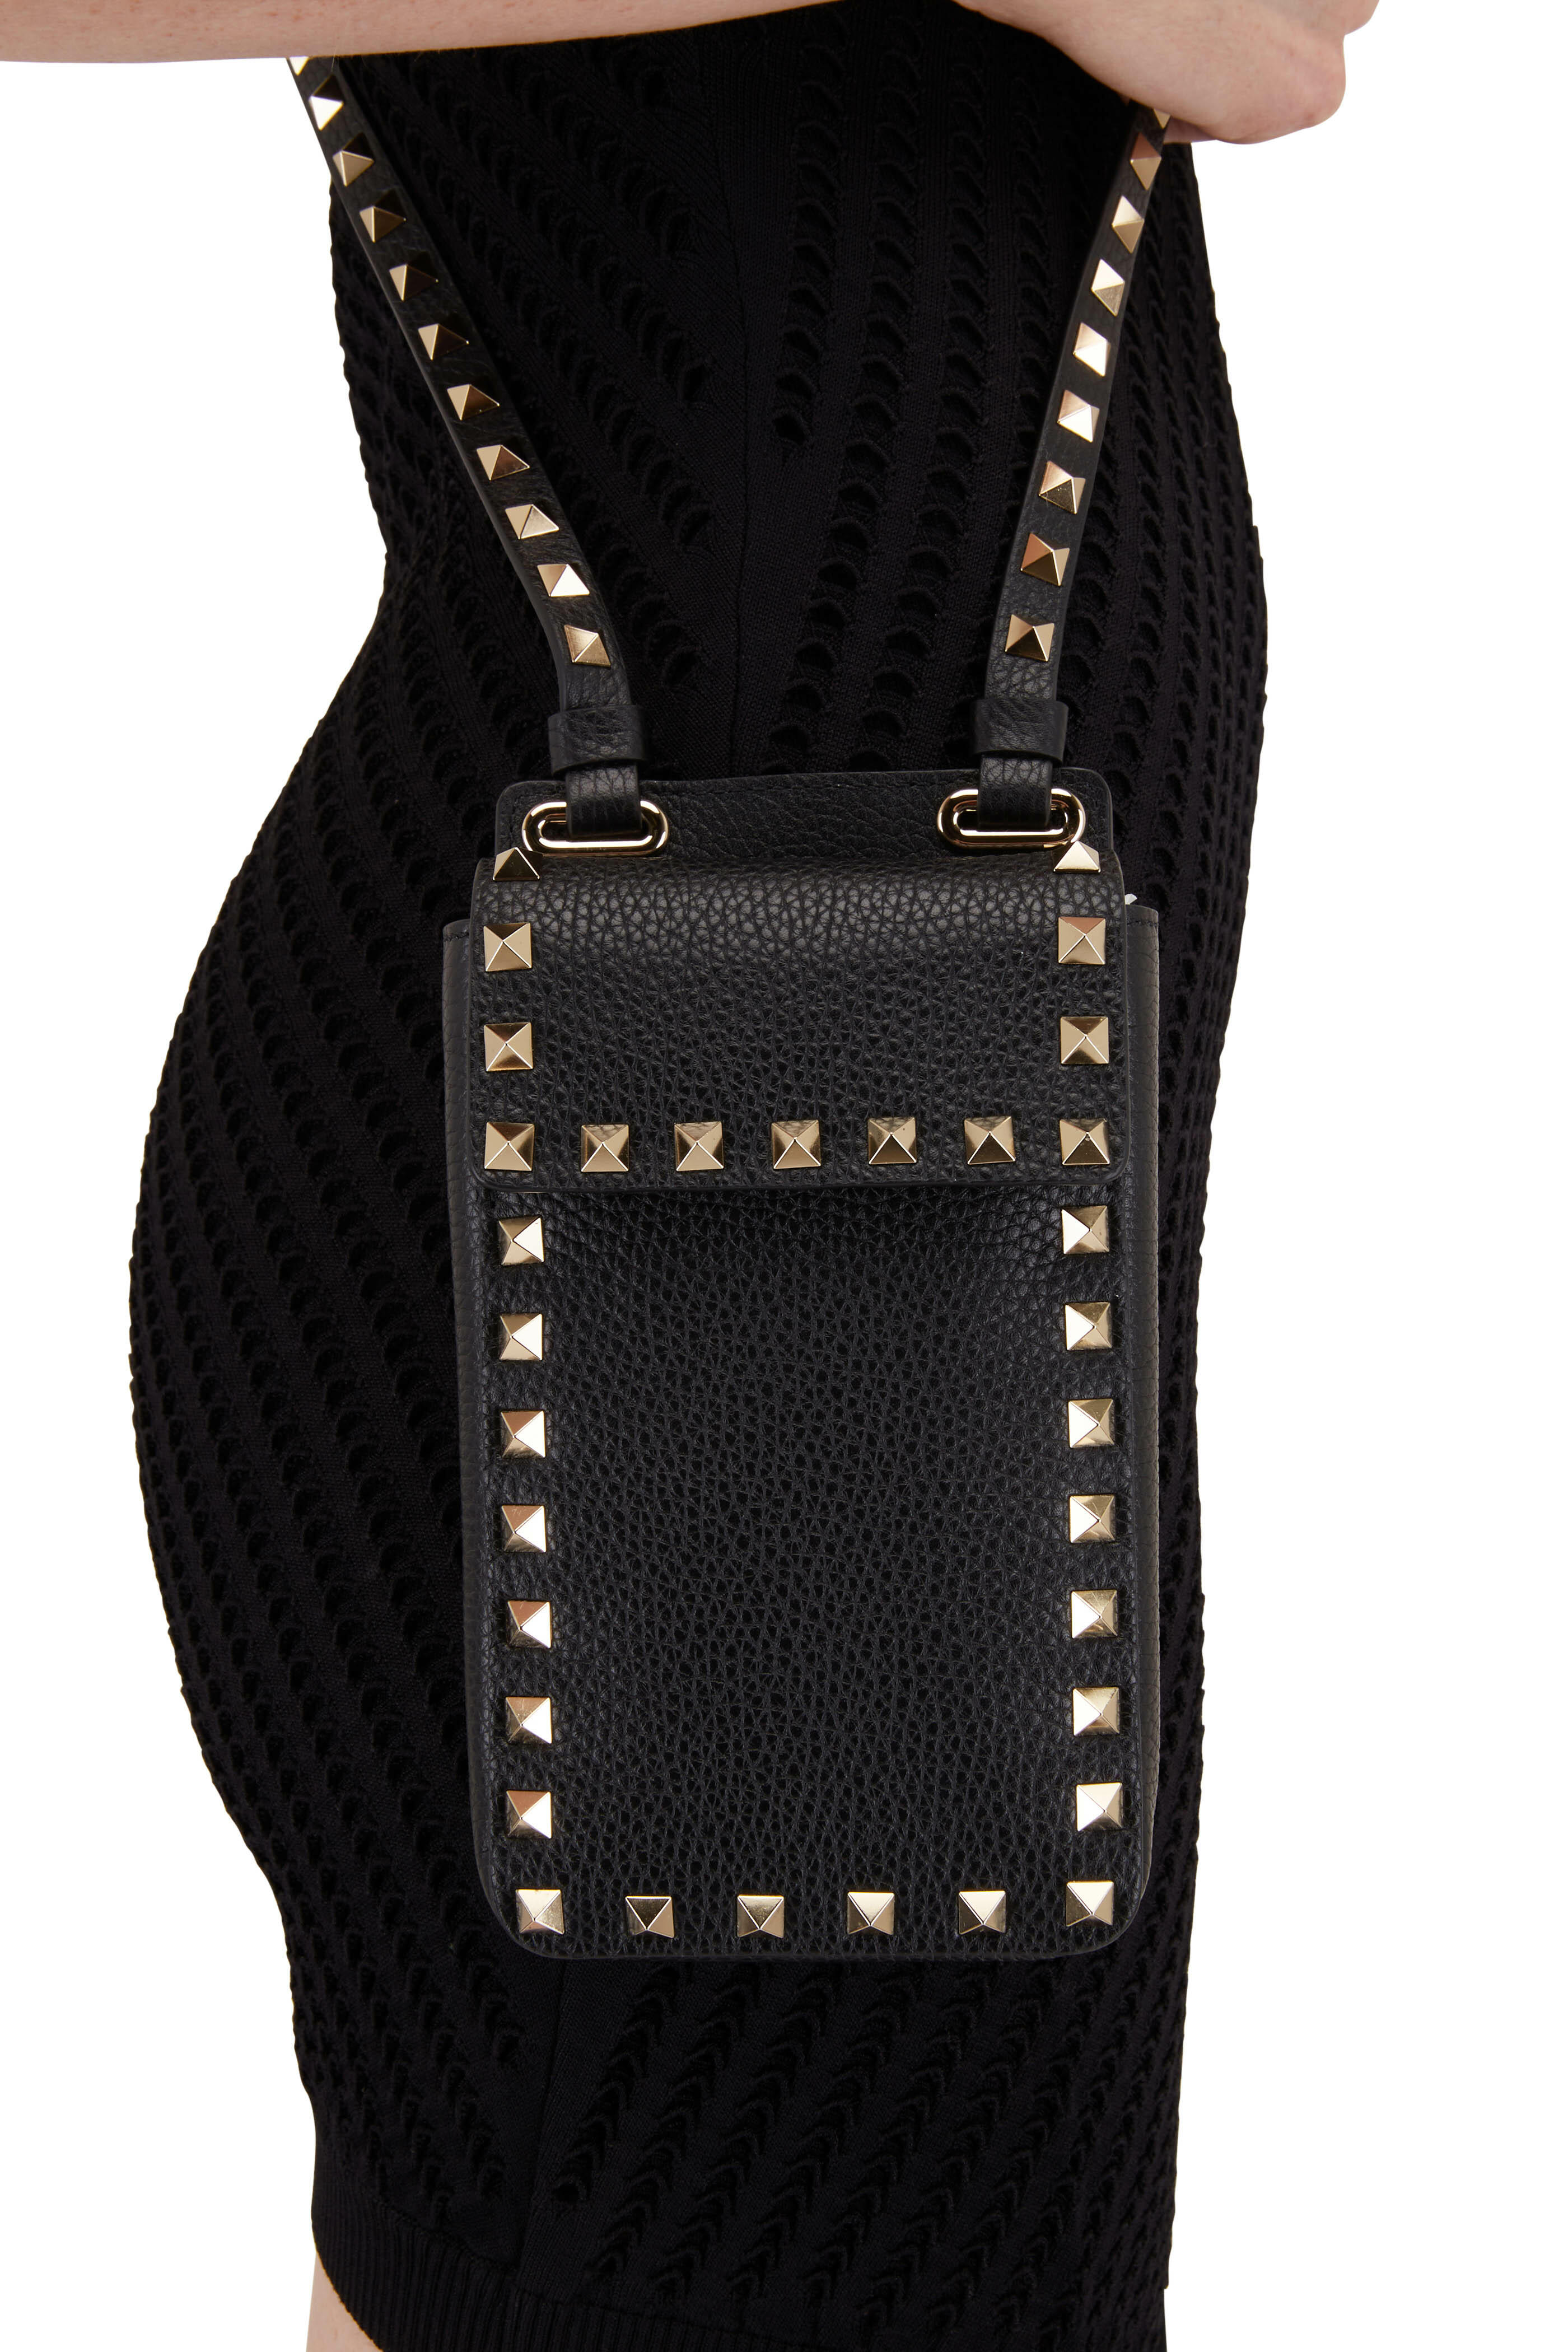 Valentino Garavani Rockstud Black Leather Crossbody Phone Holder Bag